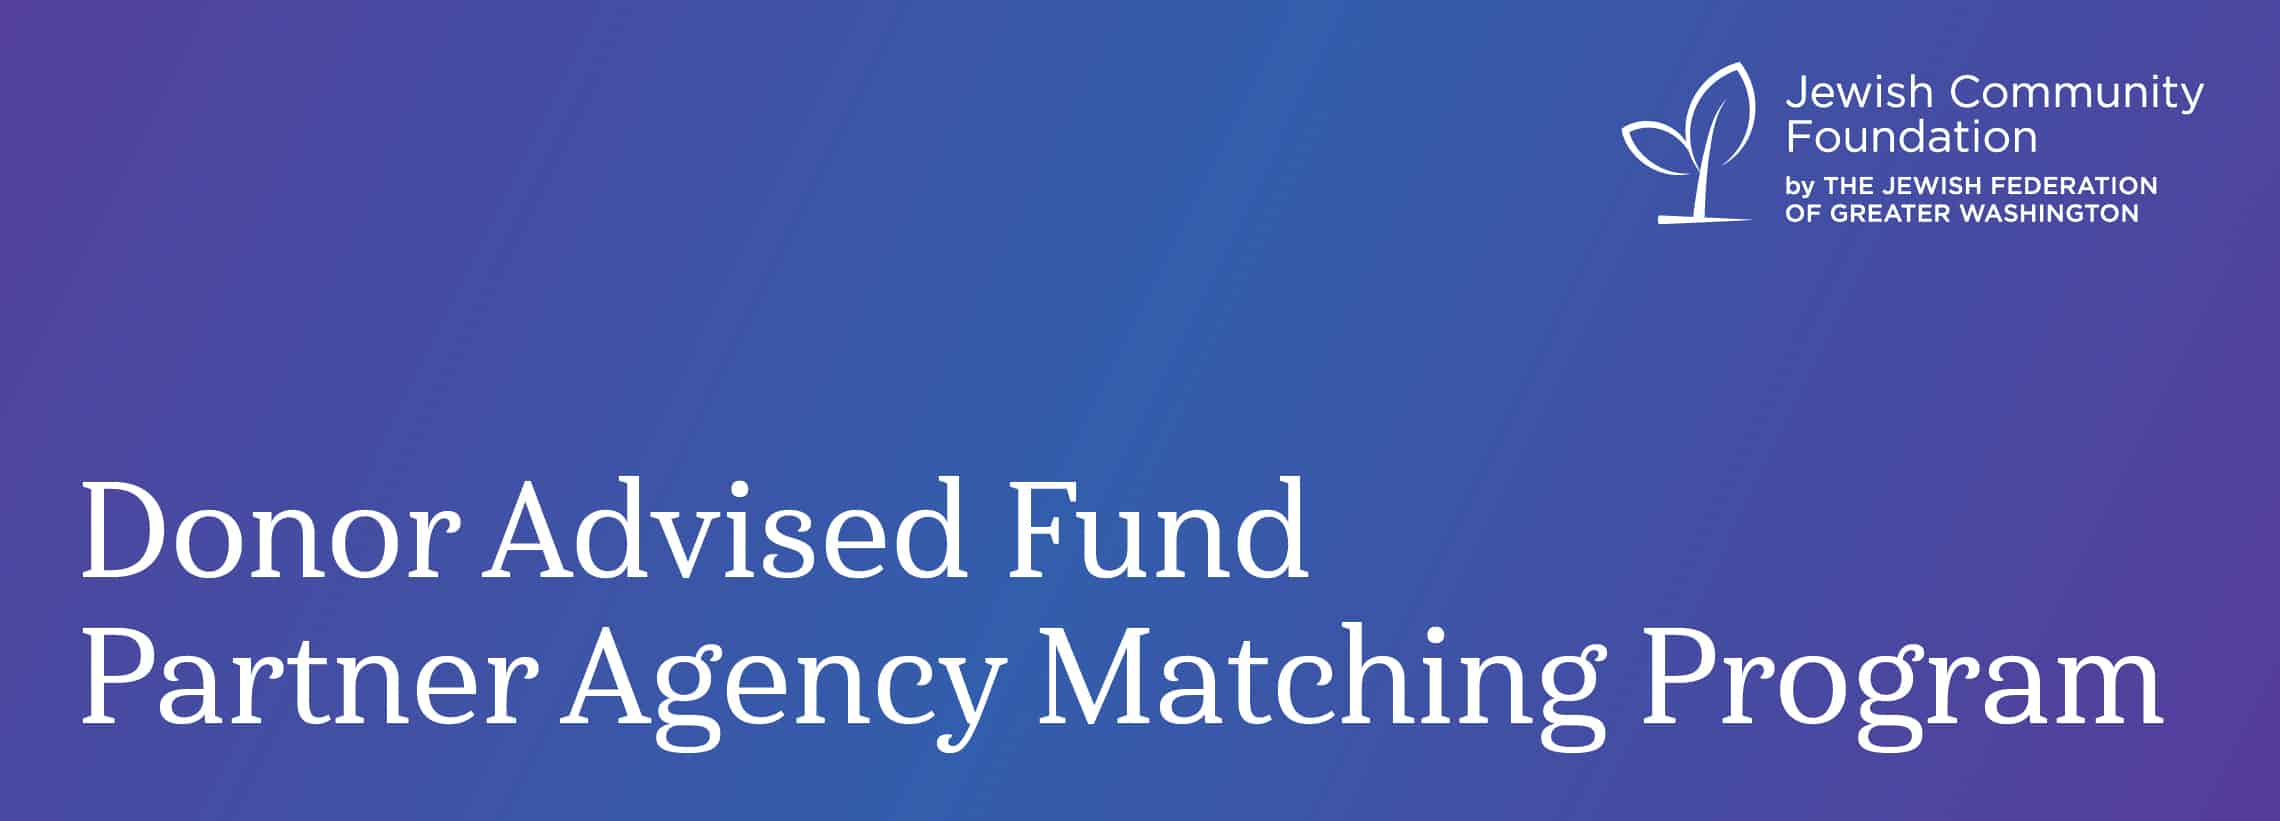 Donor Advised Fund Partner Agency Matching Program